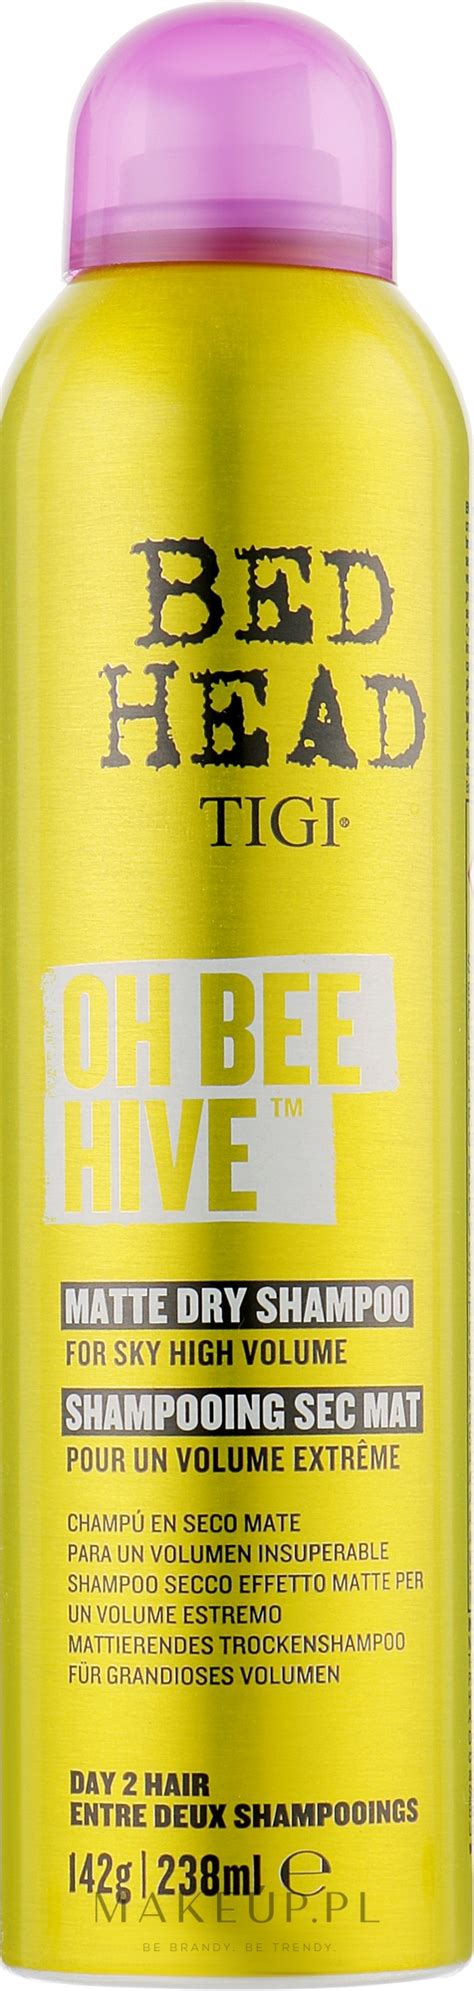 Tigi Bed Head Oh Bee Hive Matte Dry Shampoo Suchy Szampon Do W Os W